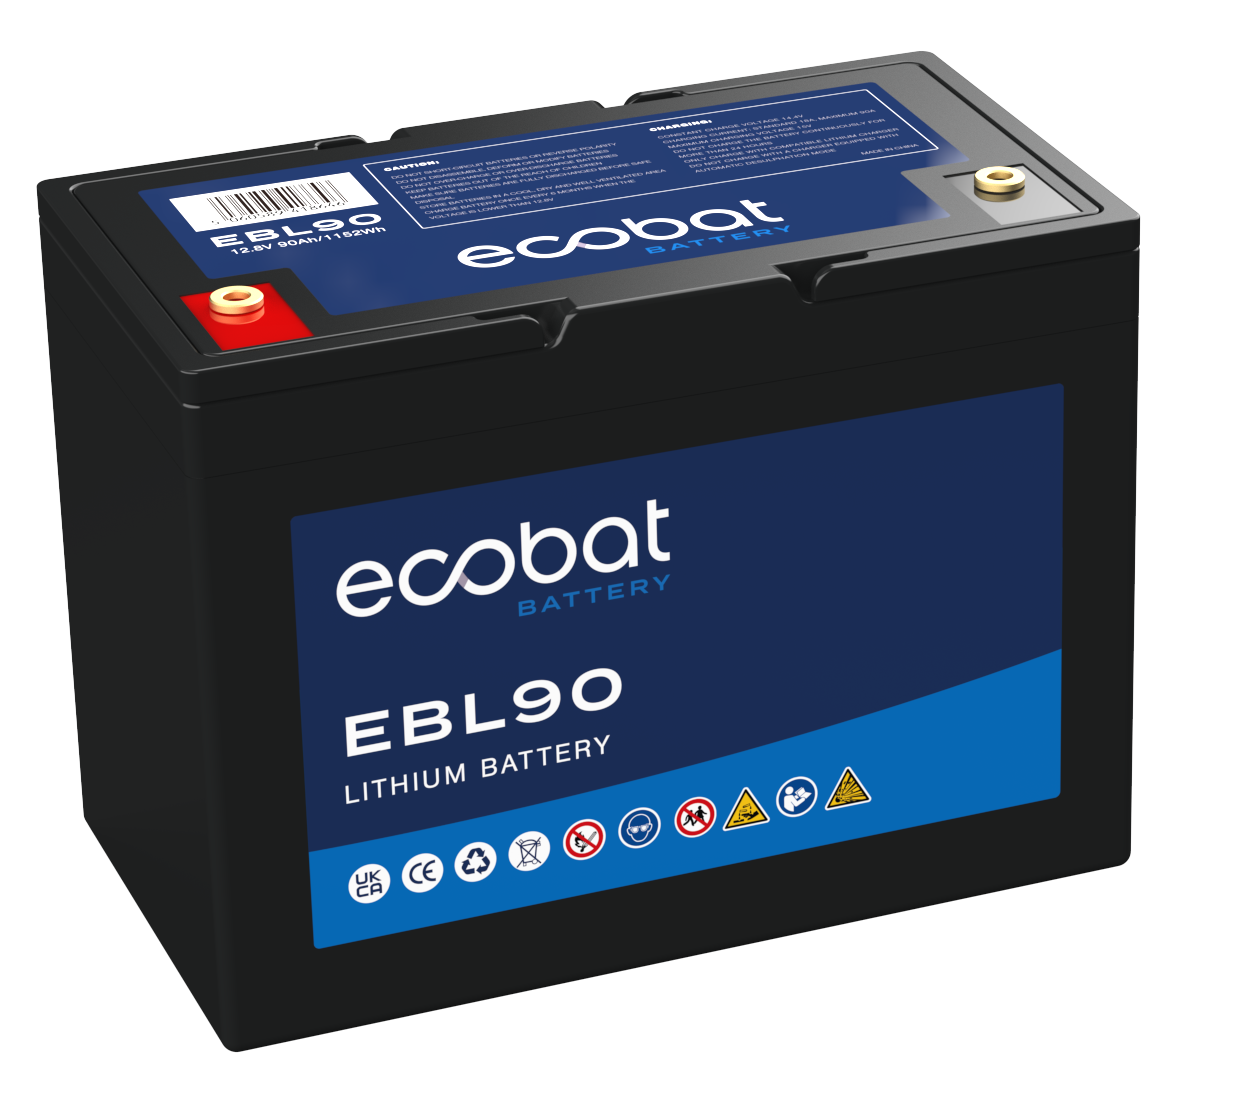 Ecobat EBL90 Lithium Leisure Battery